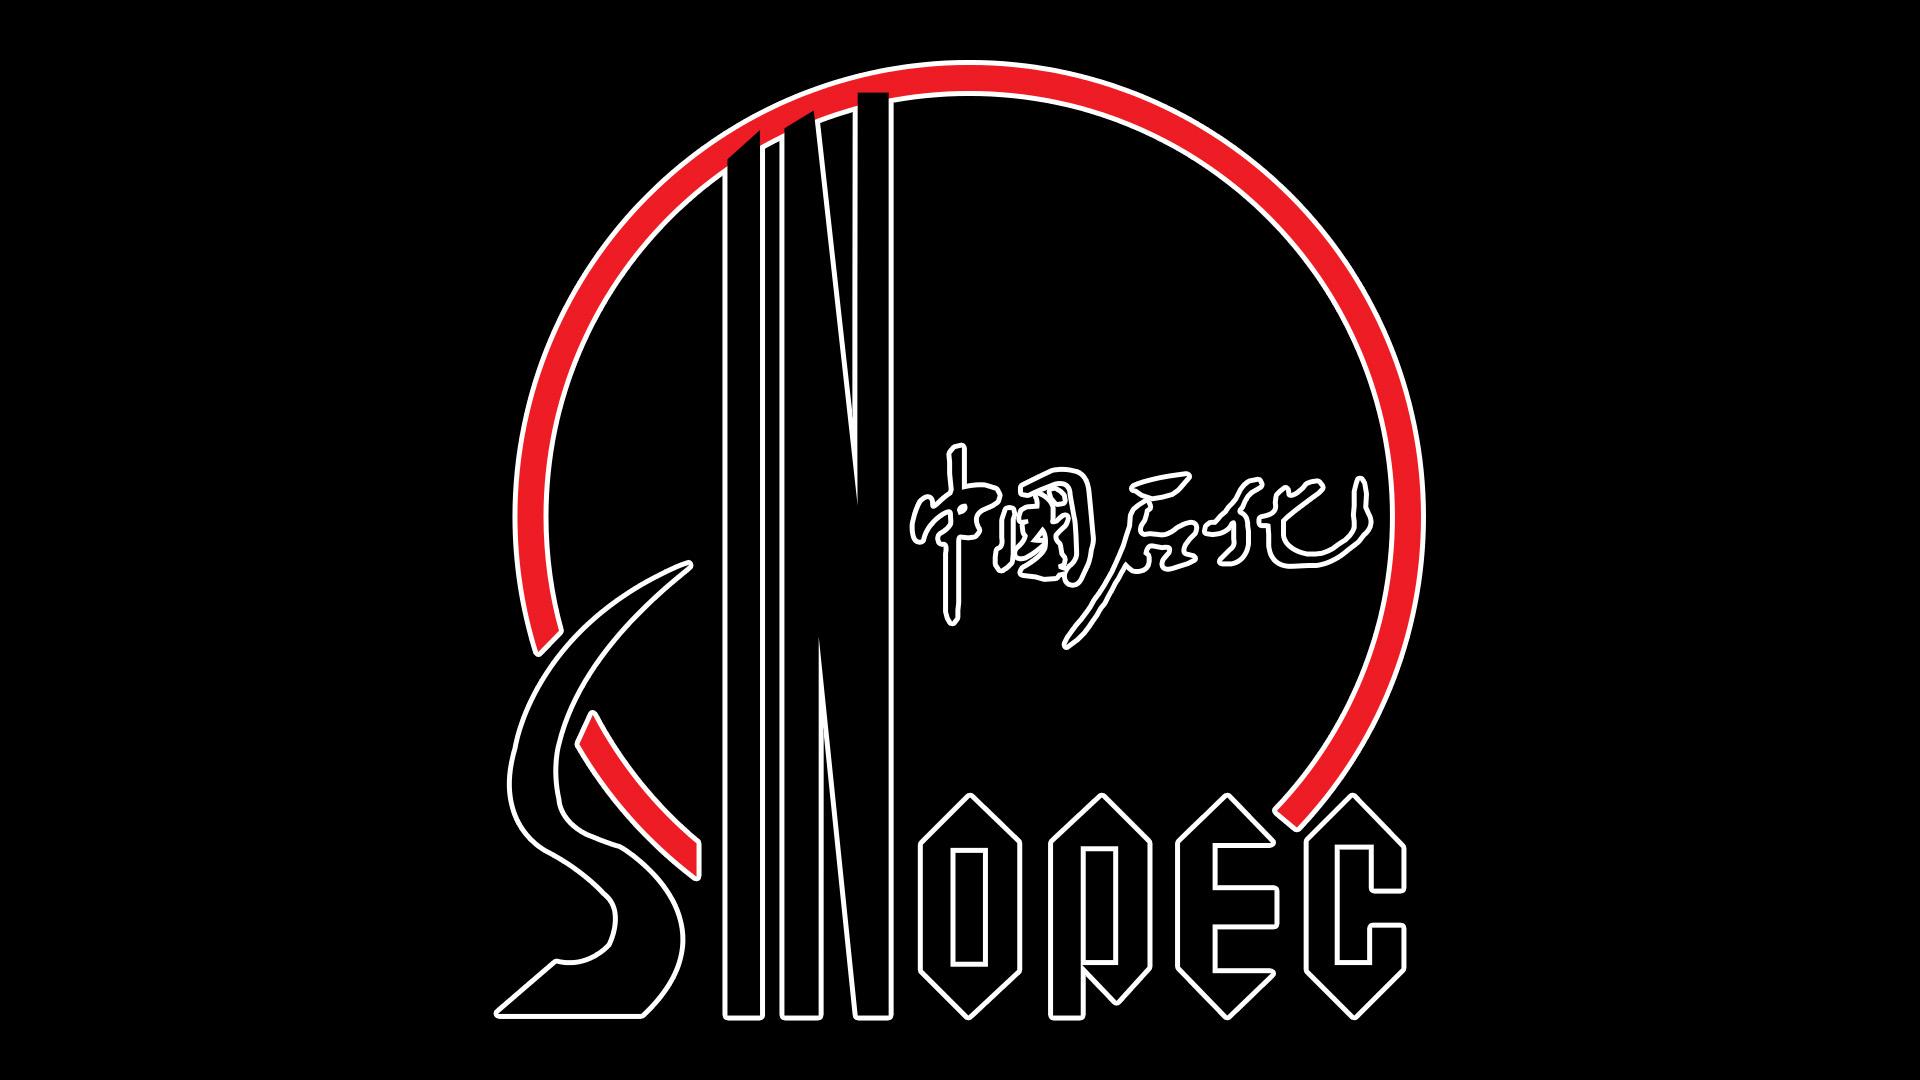 Sinopec Logo - Sinopec logo, symbol, meaning, History and Evolution